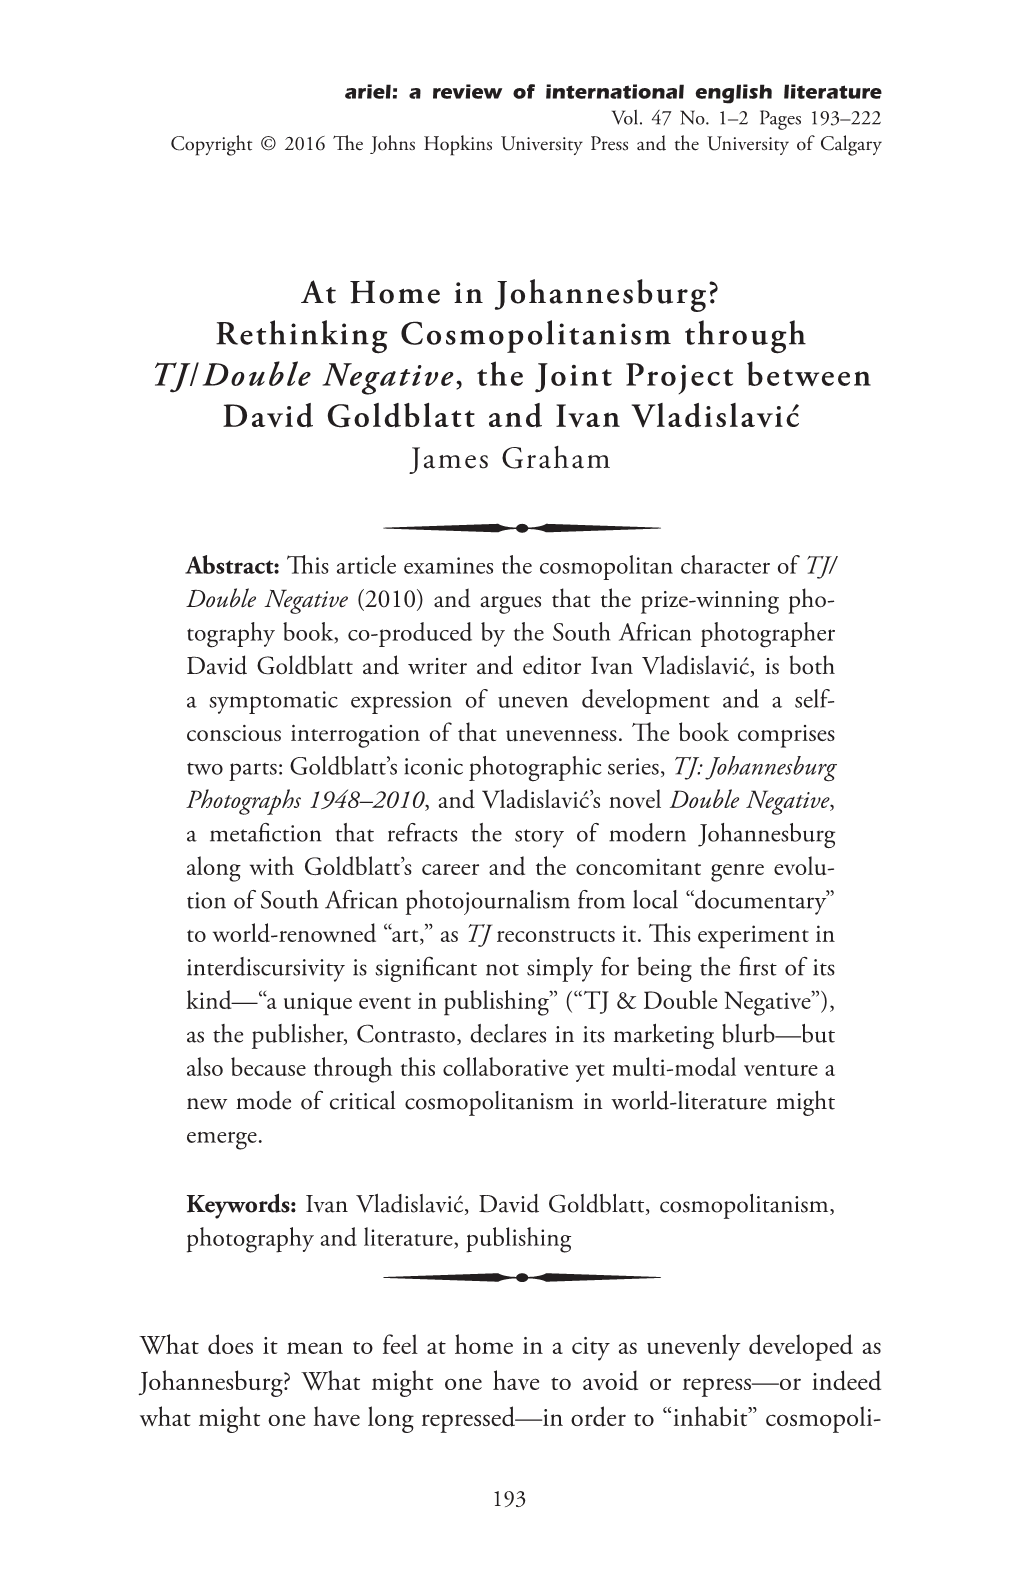 Rethinking Cosmopolitanism Through TJ/Double Negative, the Joint Project Between David Goldblatt and Ivan Vladislavić James Graham